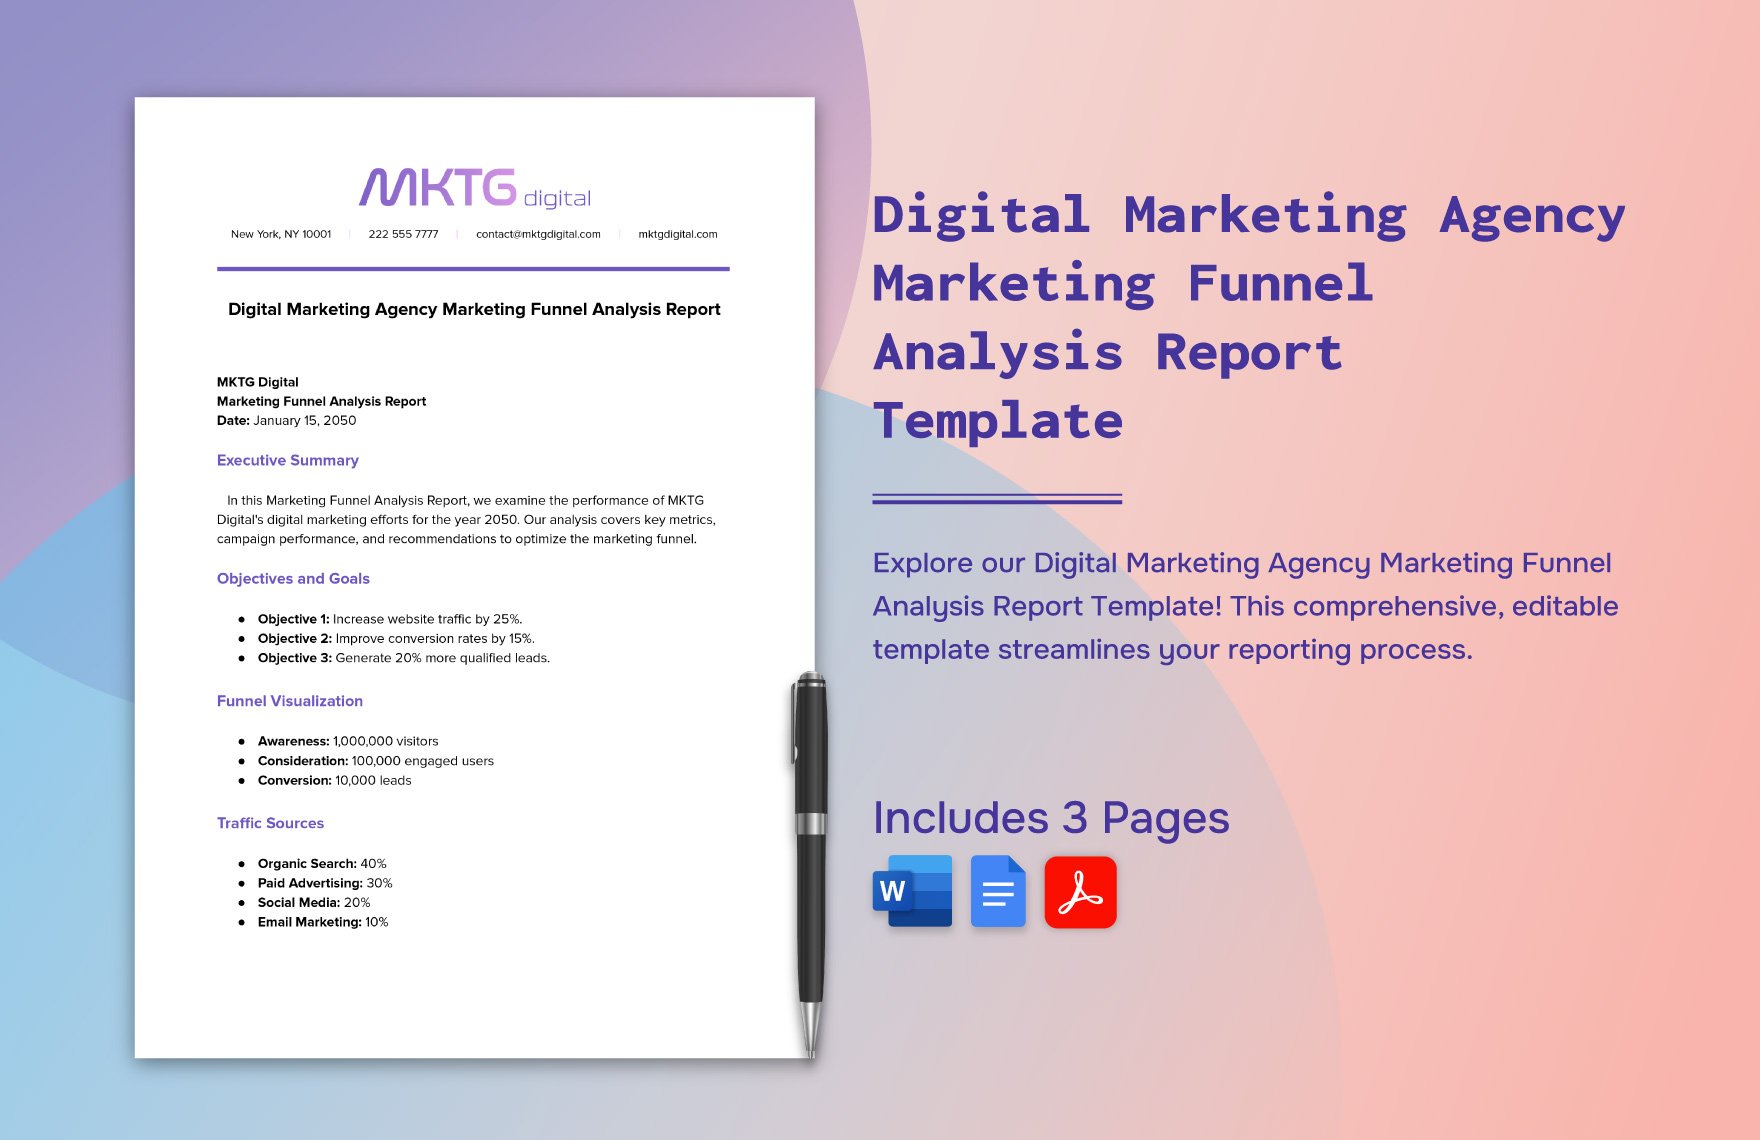 Digital Marketing Agency Marketing Funnel Analysis Report Template